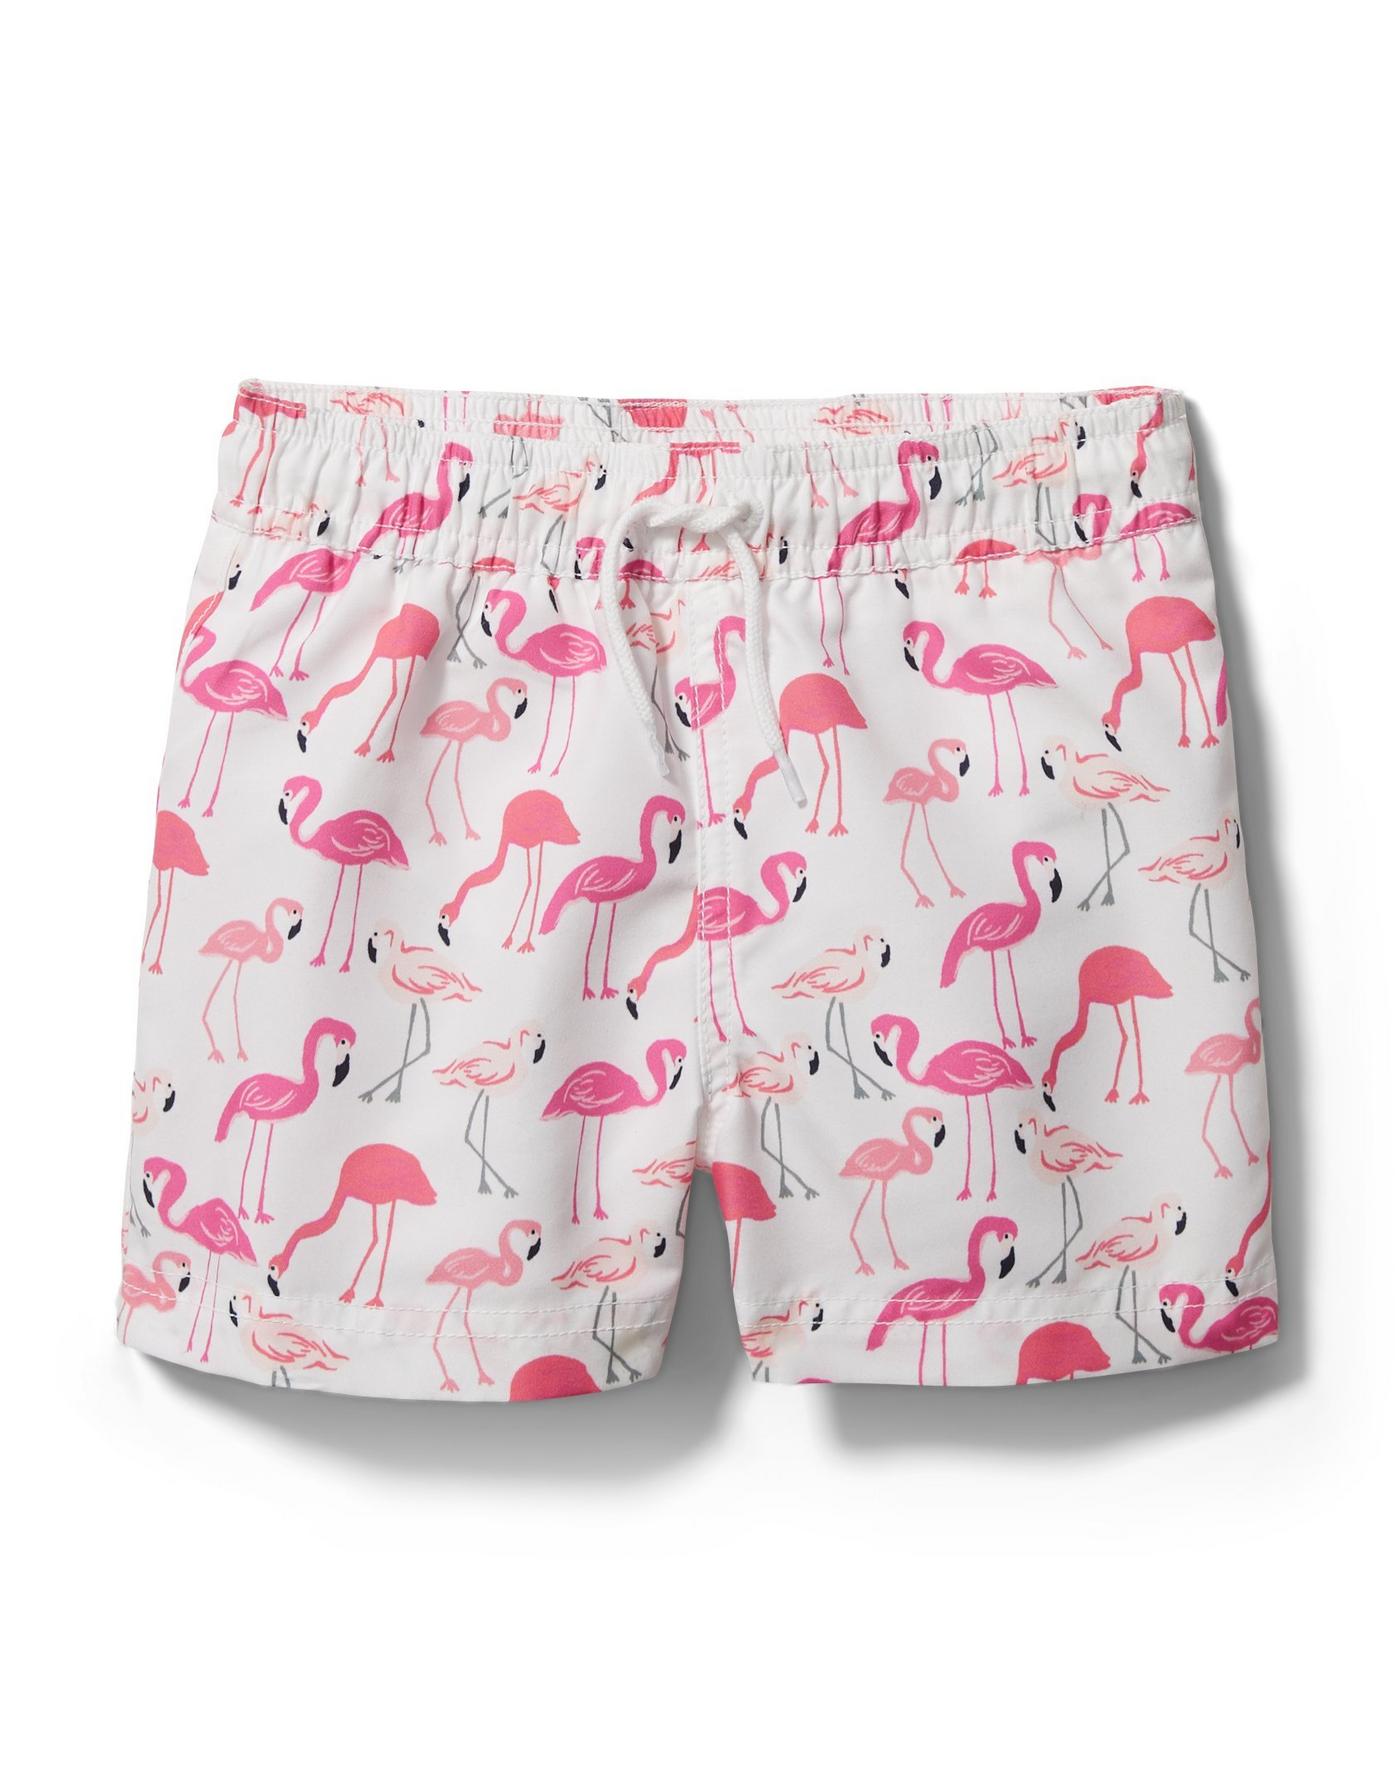 twin matching swimwear, flamingo swim trunks